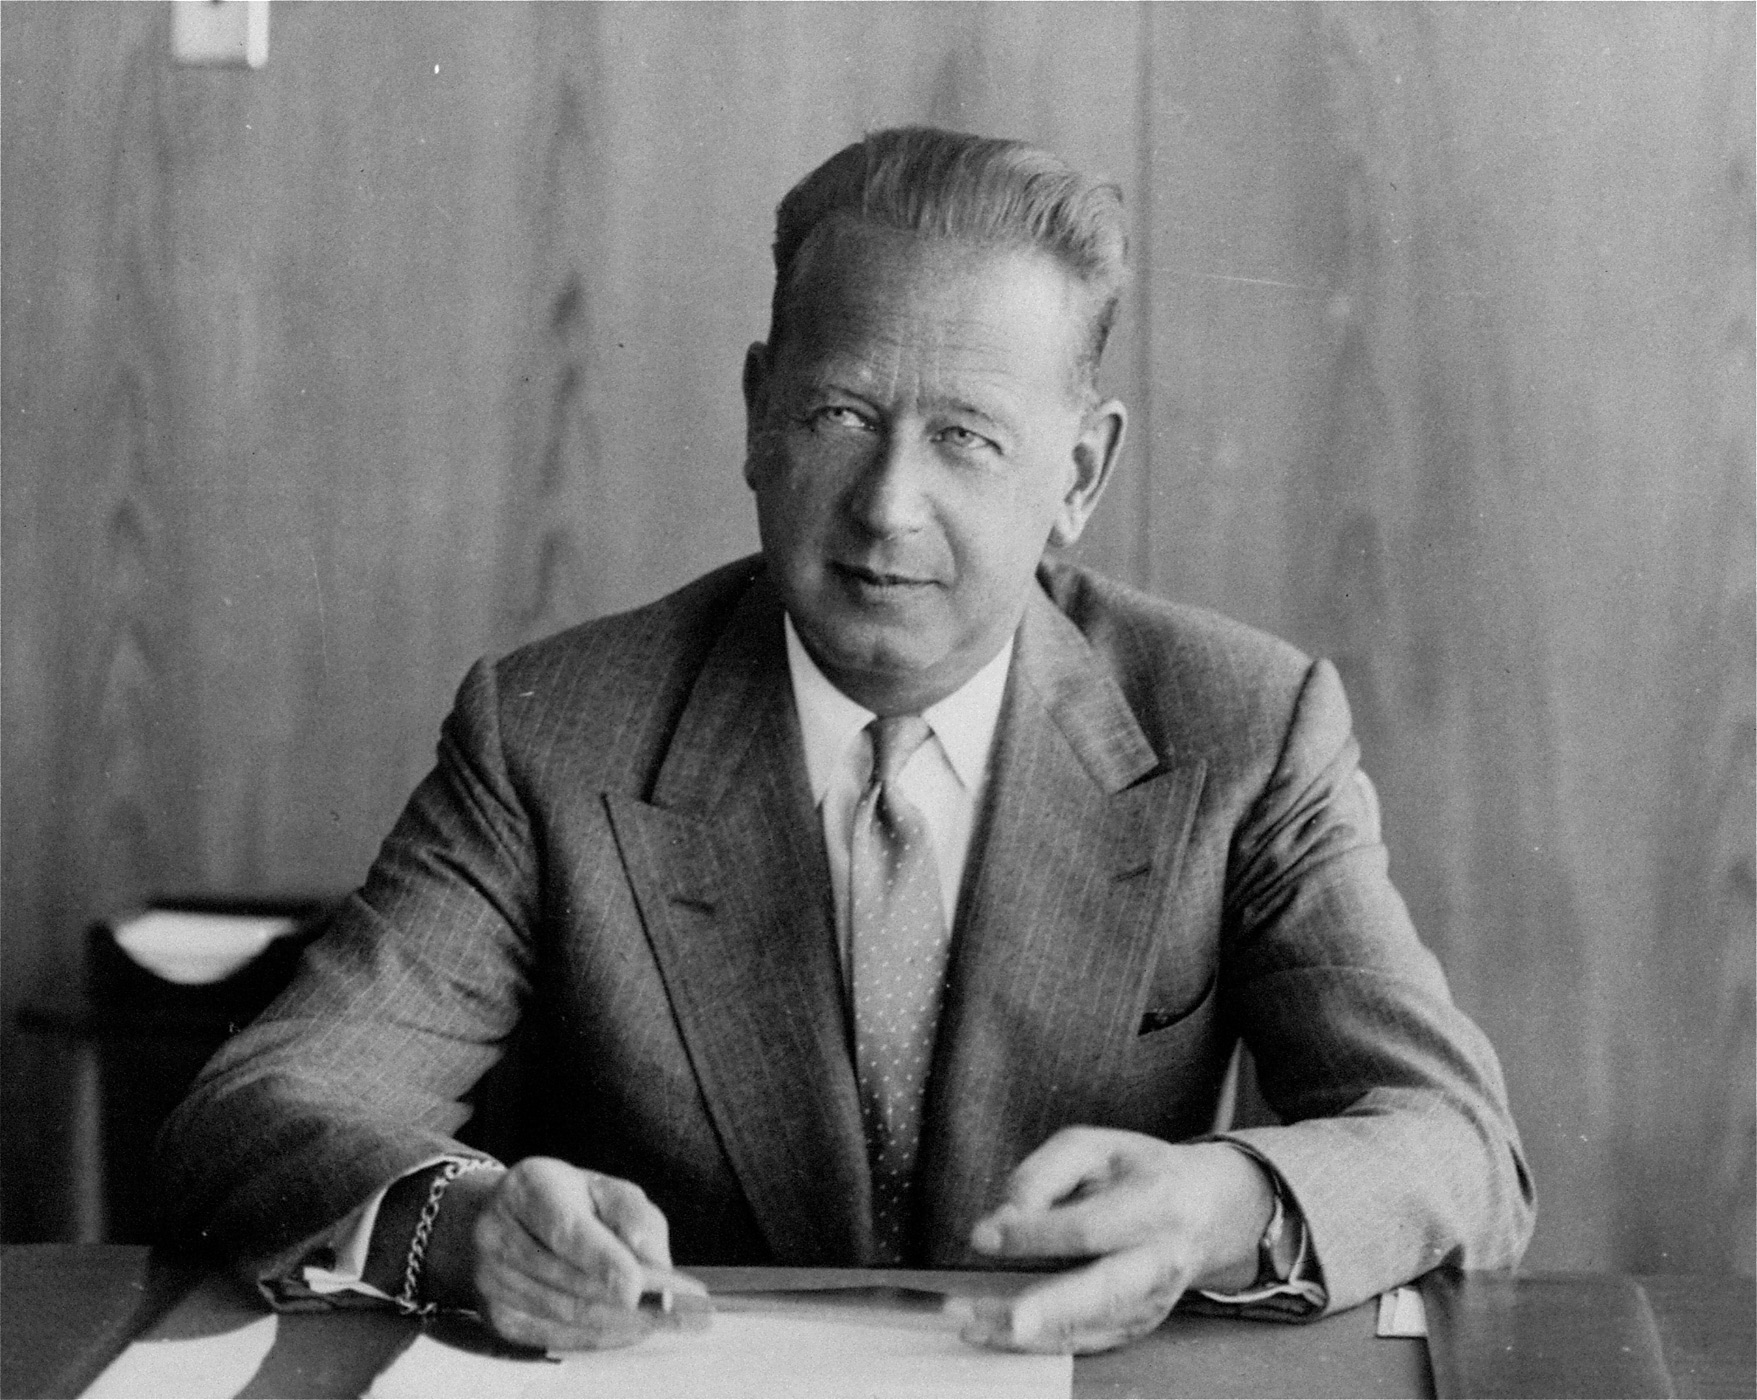 Dag Hammarskjold, former Secretary General of the United Nations, is seen in 1959. (AP)